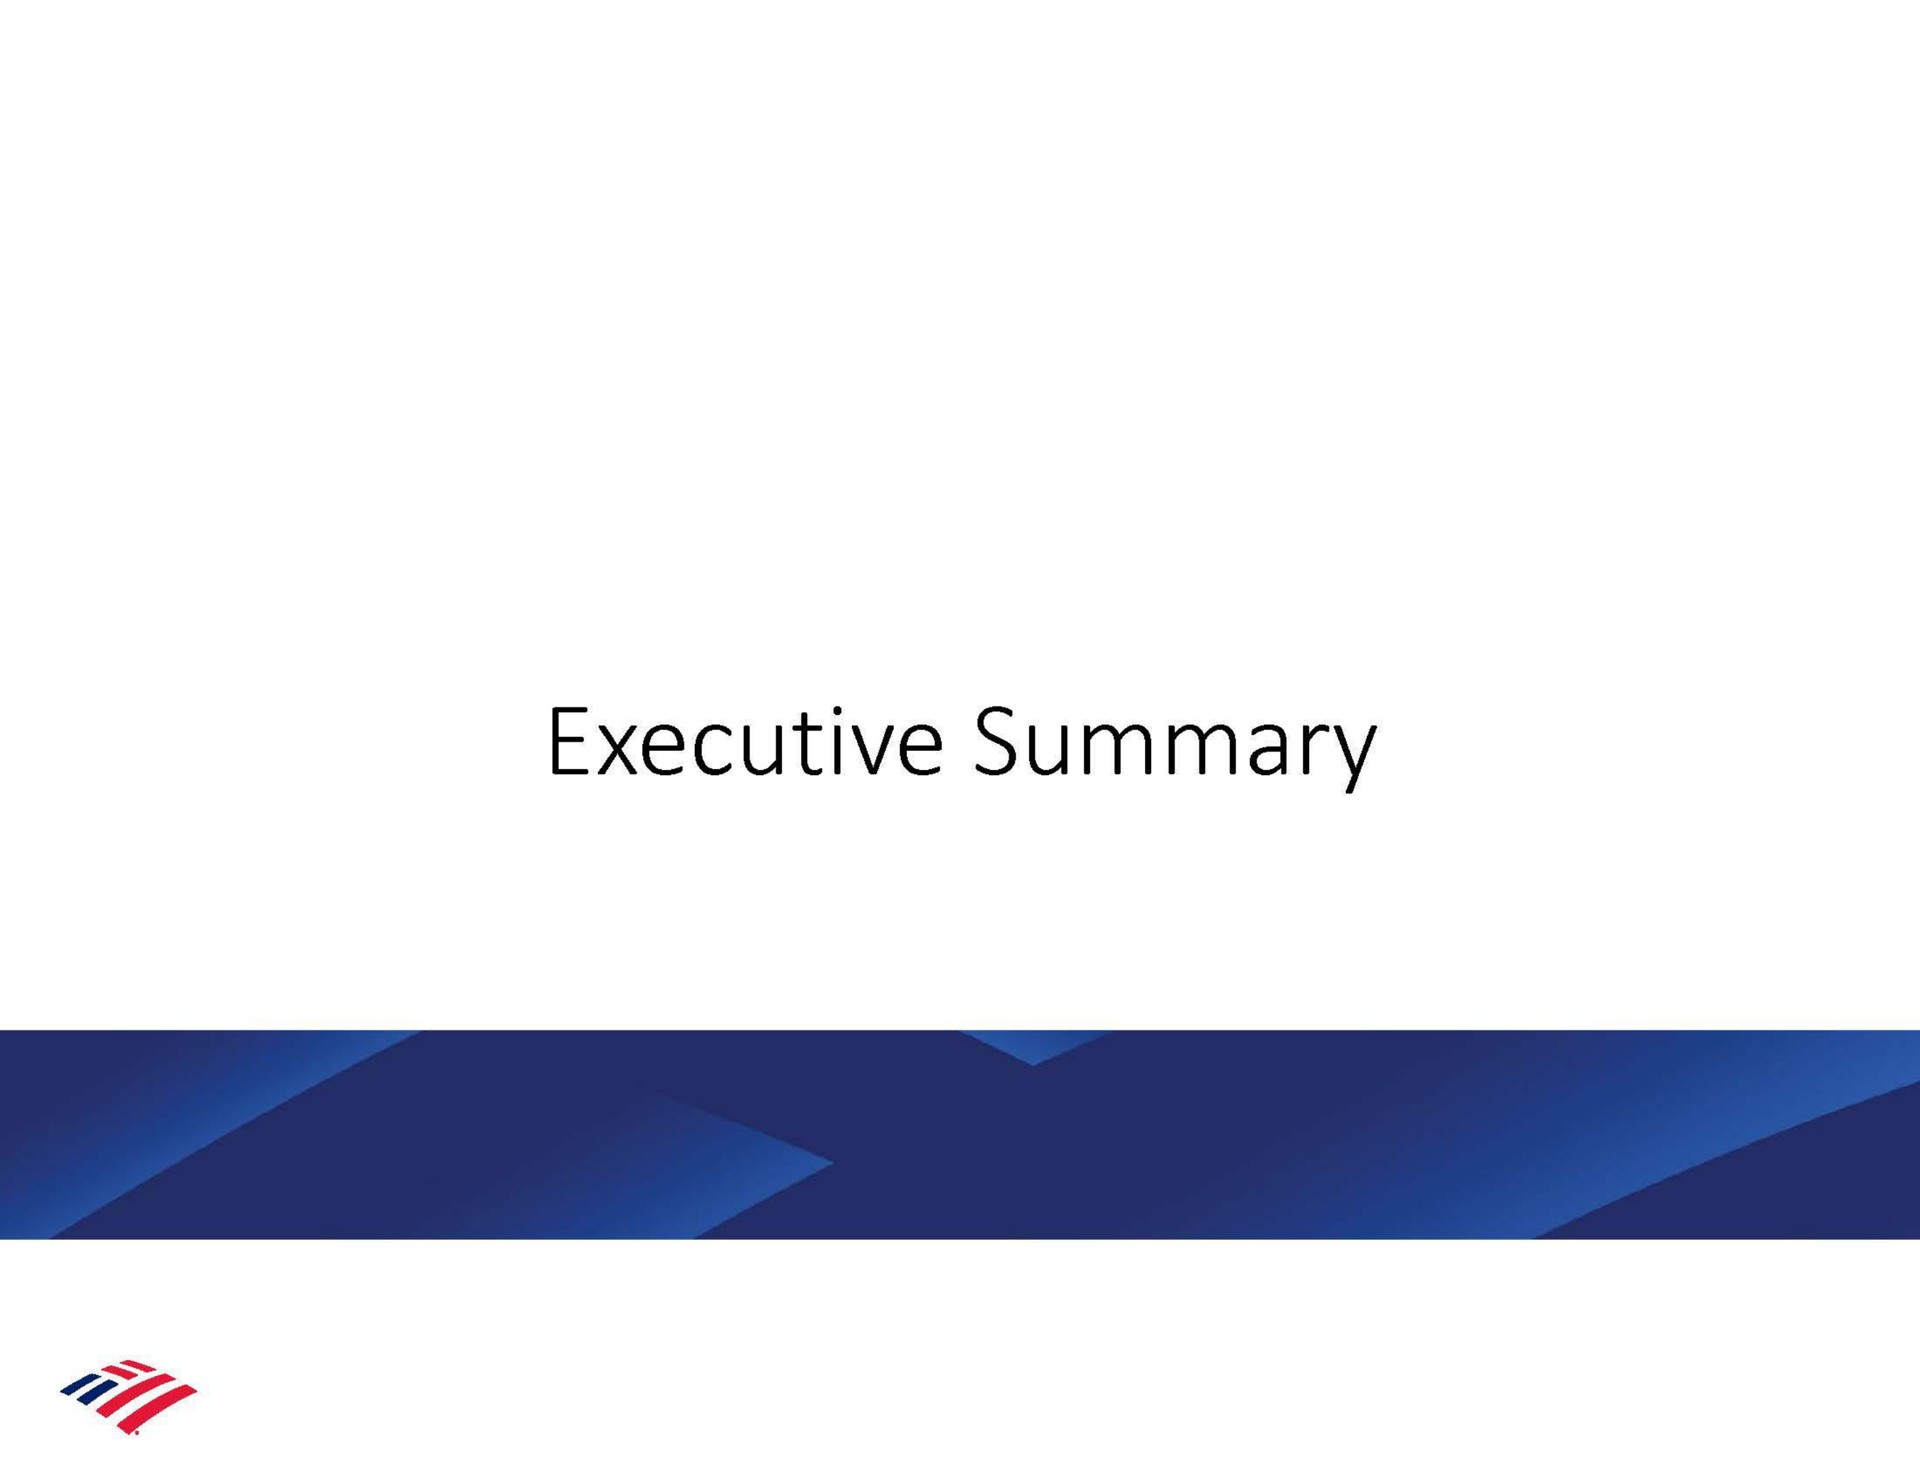 executive summary as | Bank of America